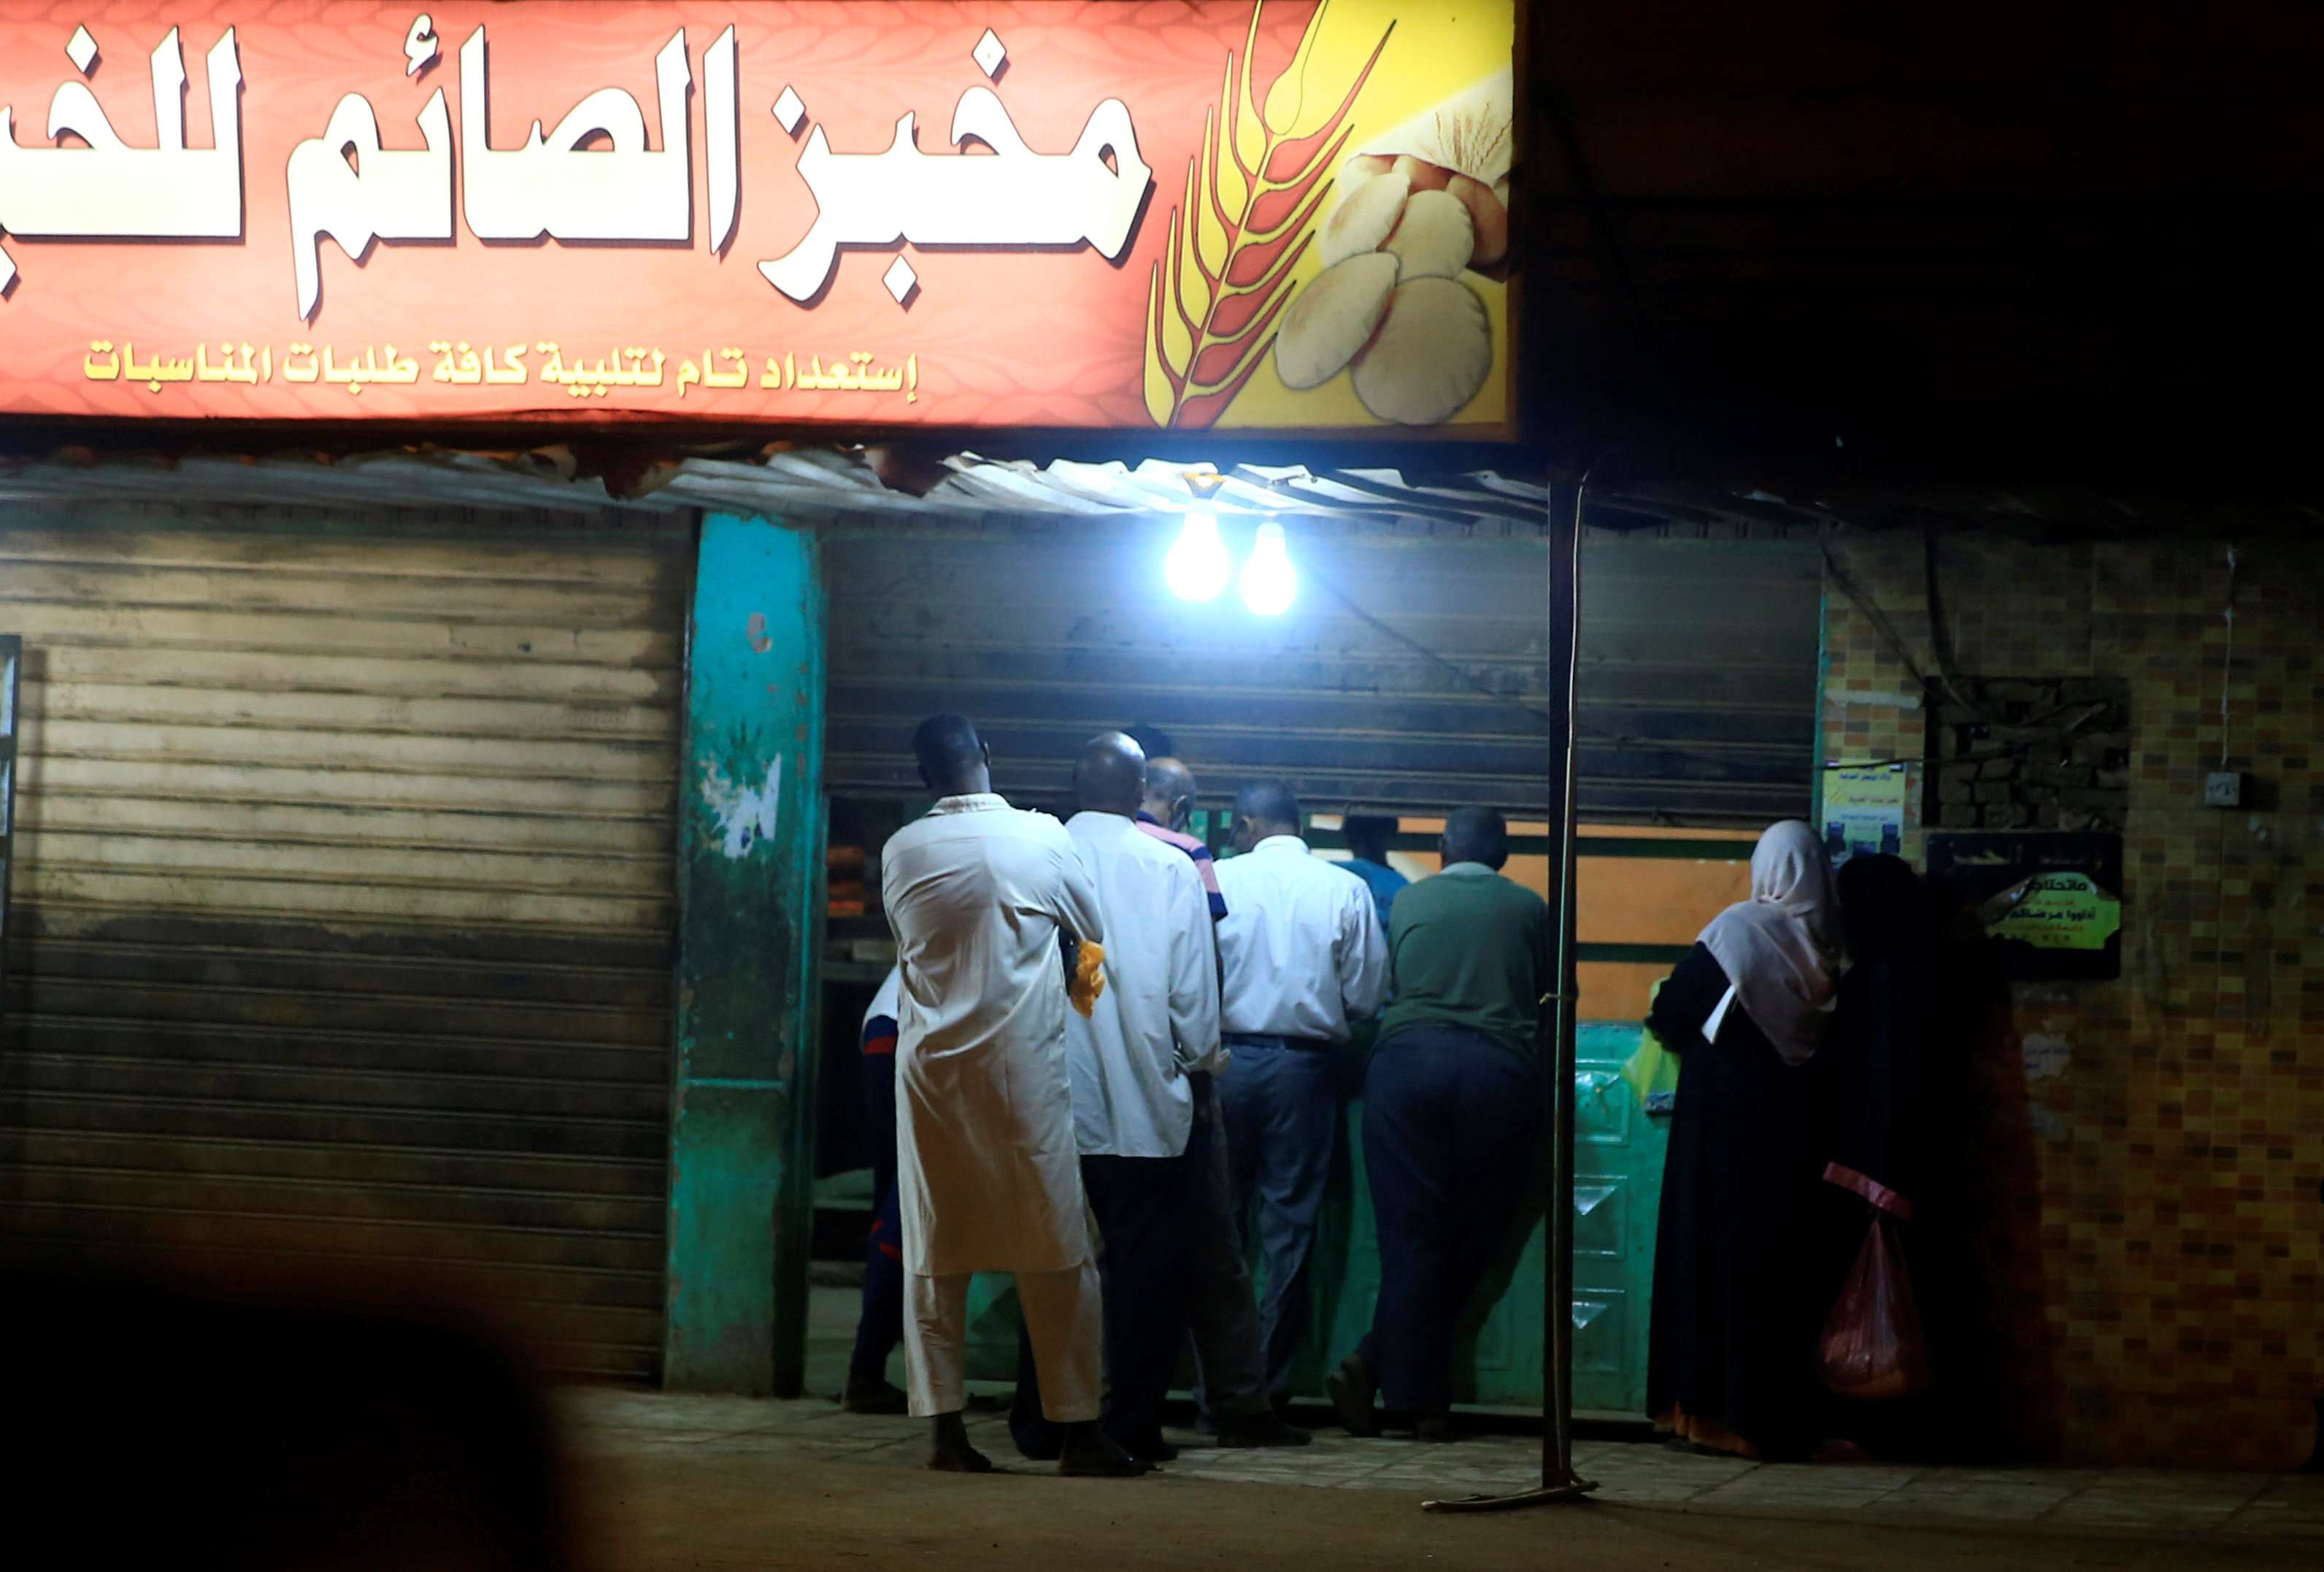 Civilians queue to buy bread from a bakery in Khartoum, Sudan January 6, 2019.